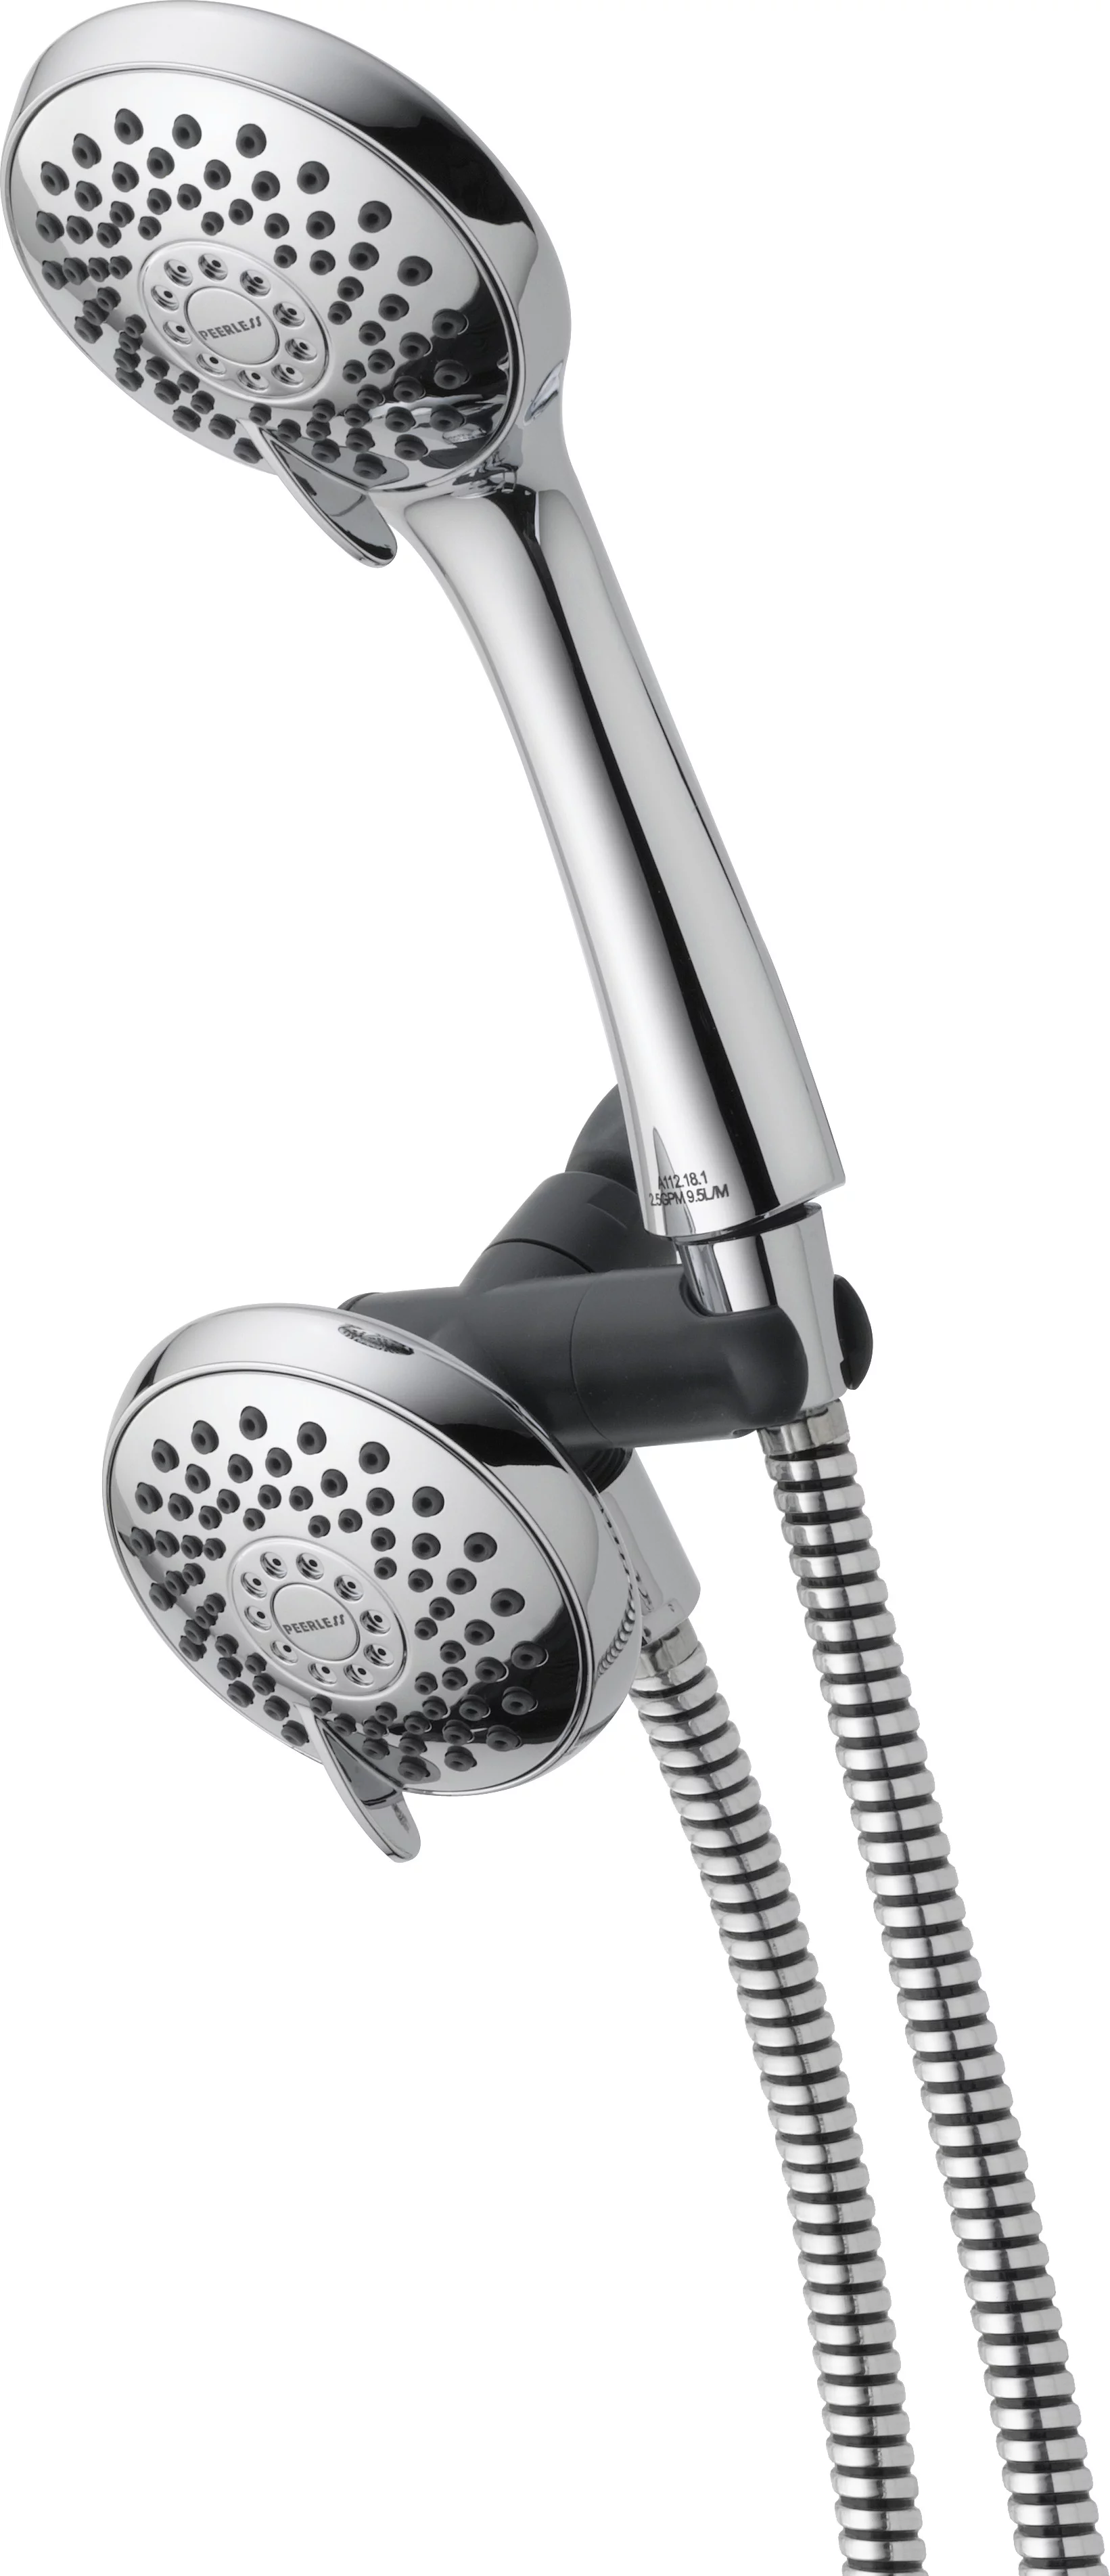 Peerless 3-Spray Hand Shower/Shower Head Combo in Chrome